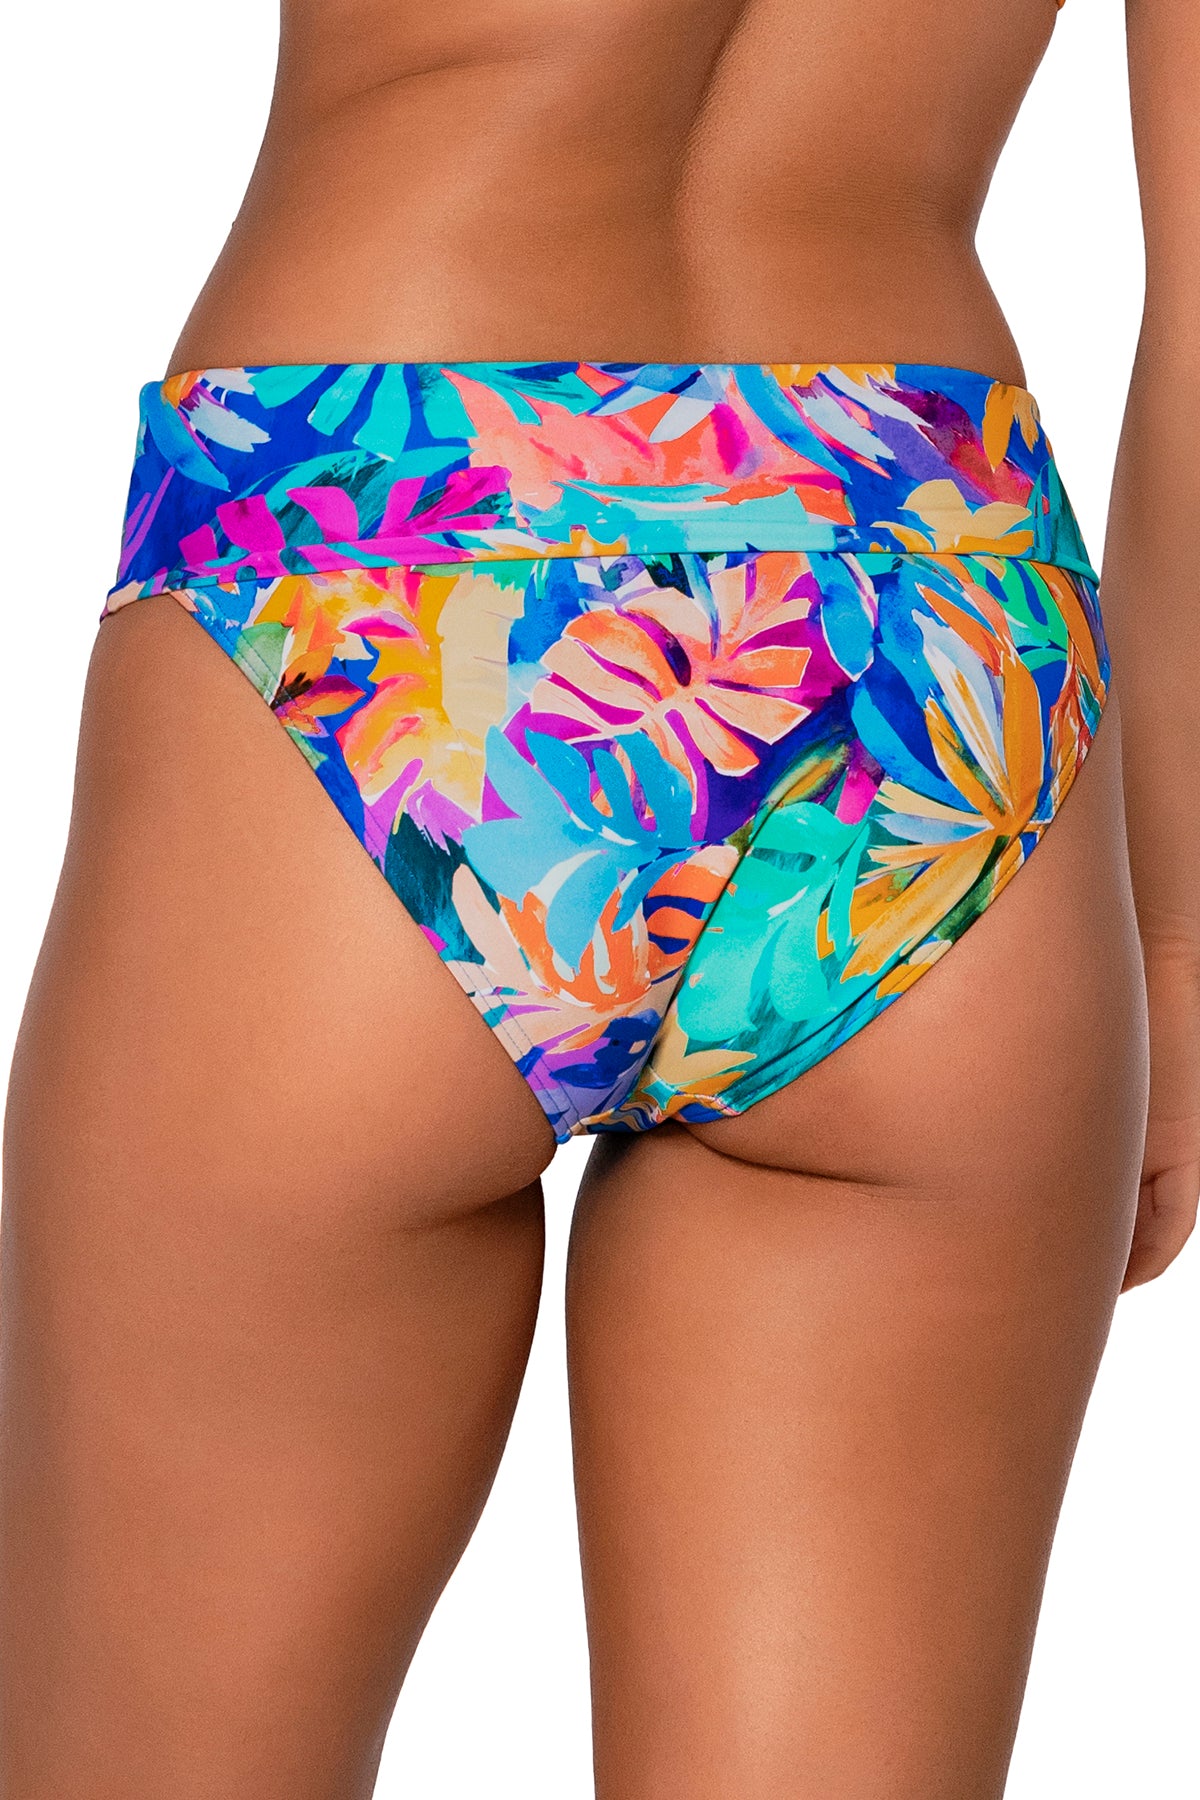 Back view of Sunsets Alegria Hannah High Waist bikini bottom showing folded waist